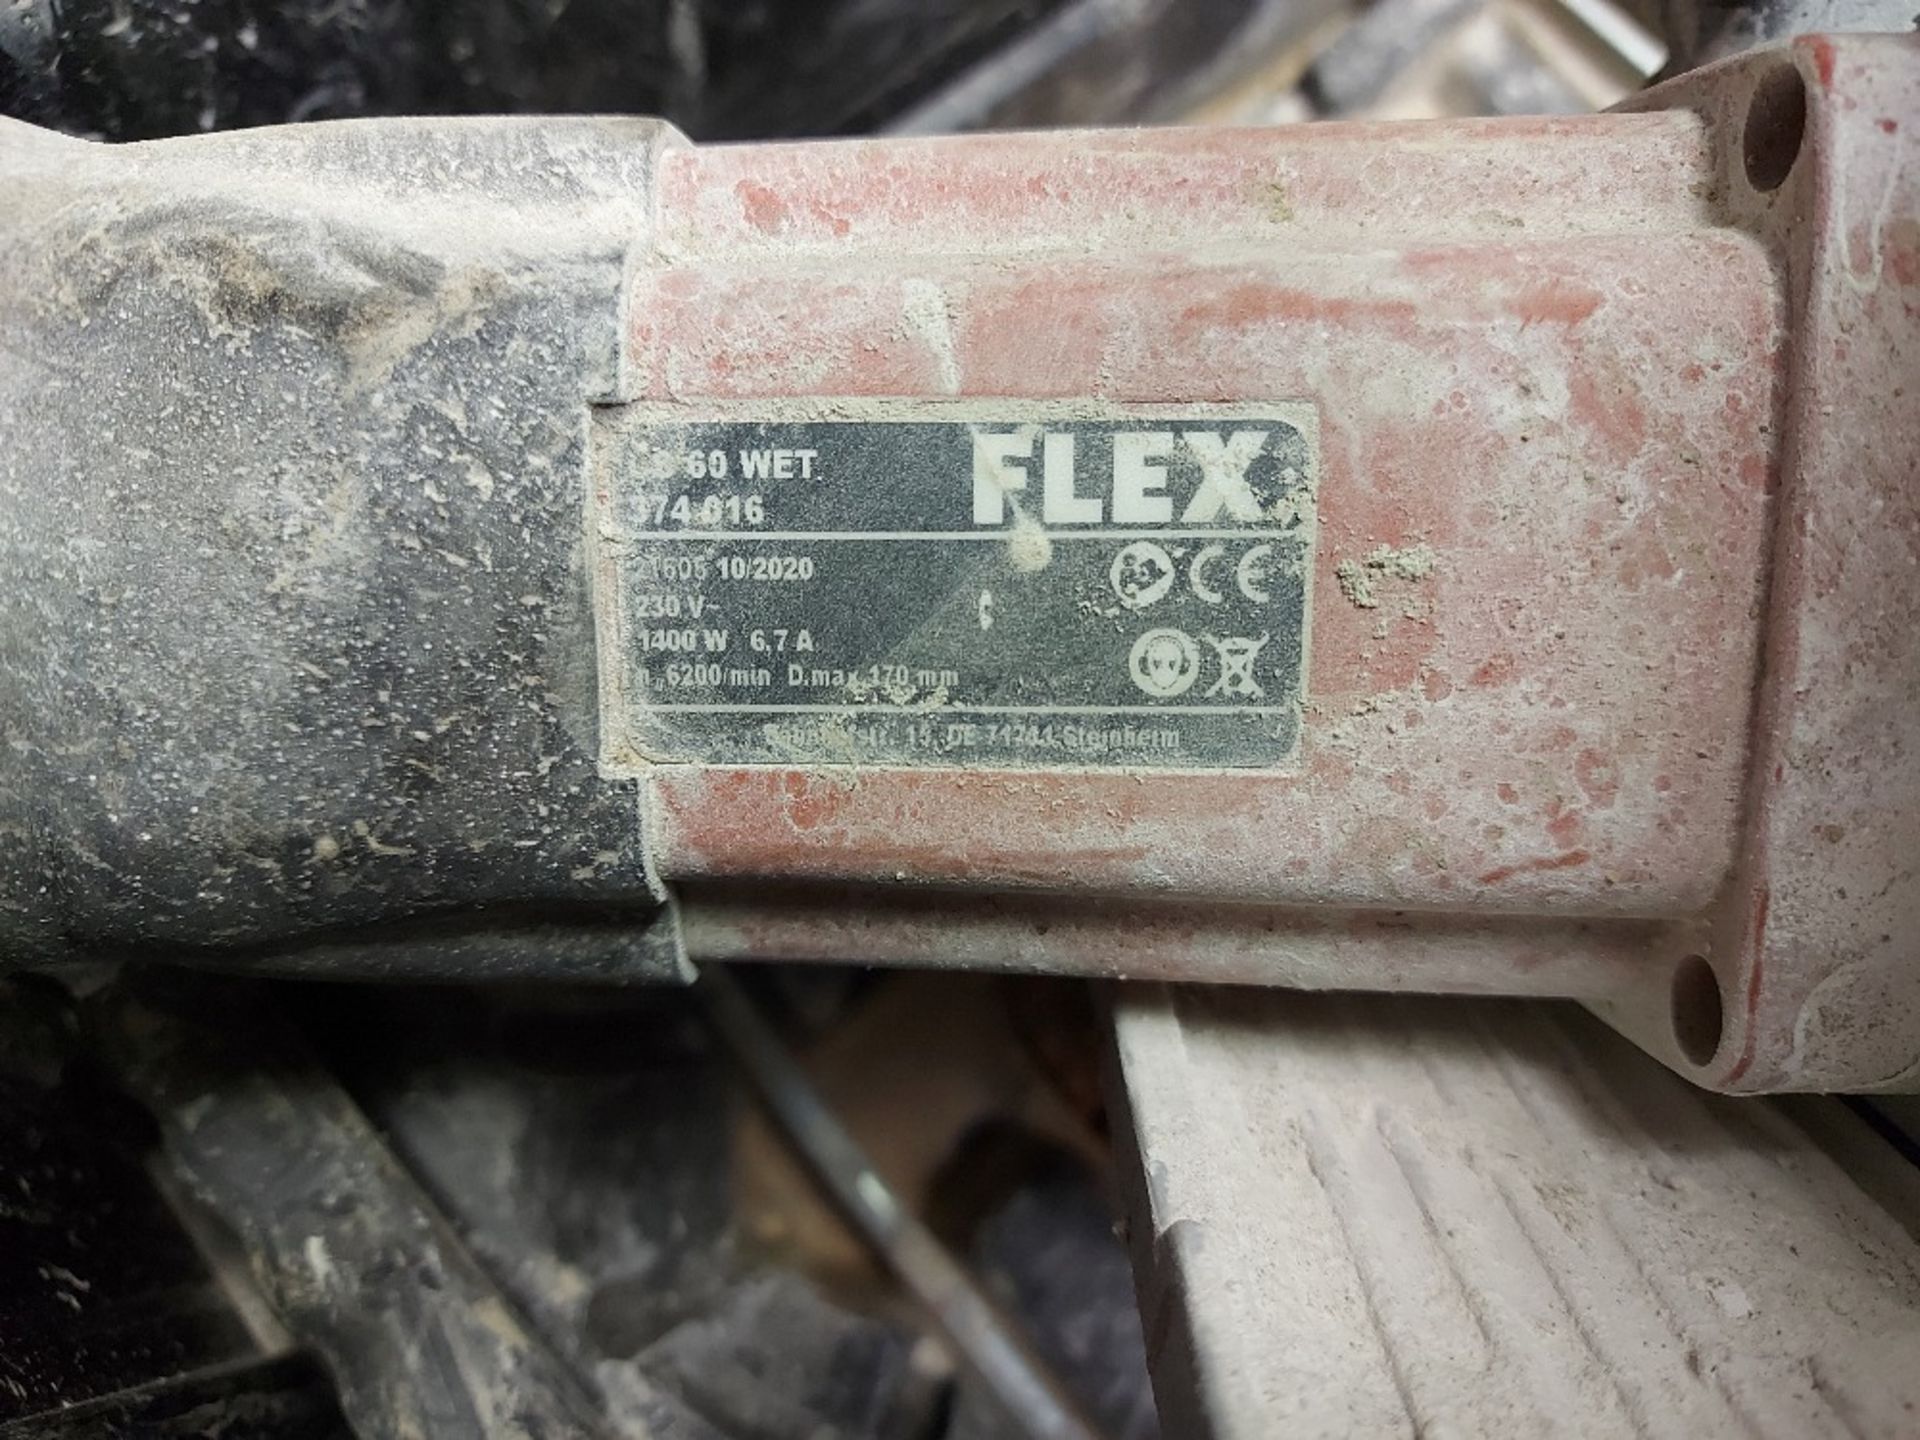 Flex CS 60 Wet Stone Saw - Image 3 of 5